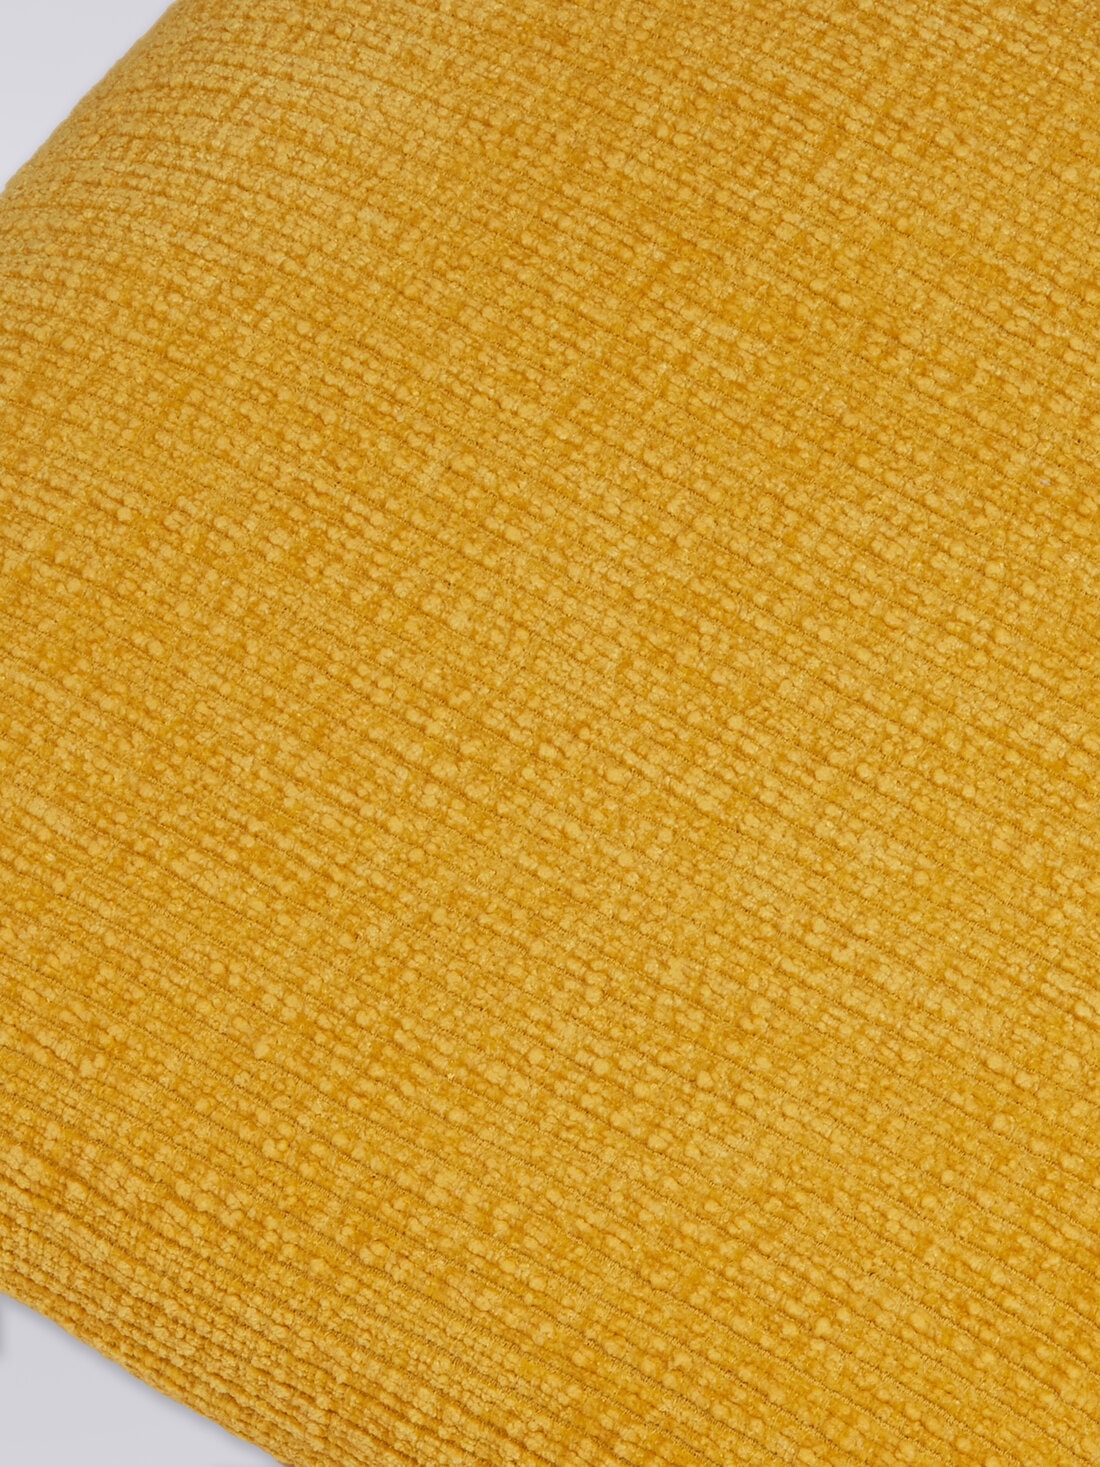 Baracoa cushion 60x60 cm, Multicoloured  - 8051275608257 - 2